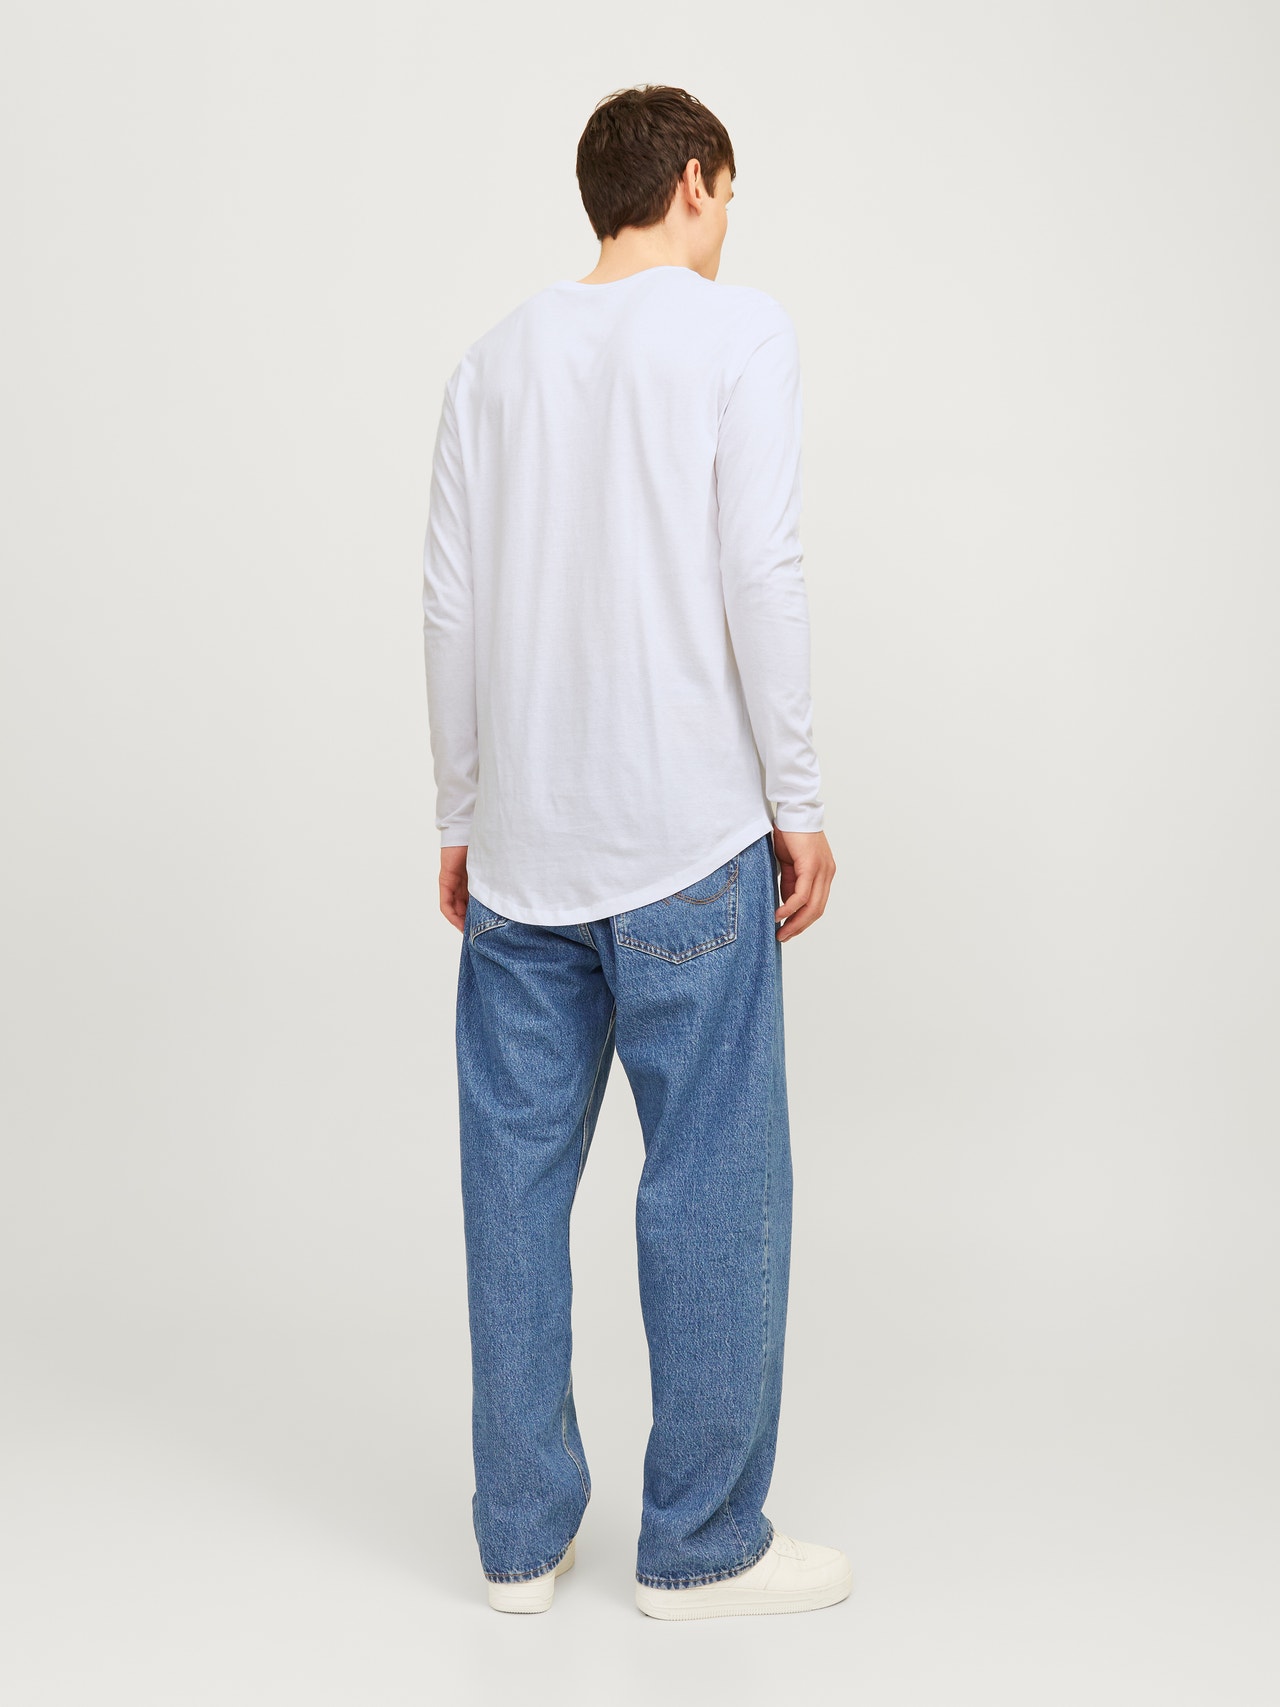 Jack & Jones Long Line Fit O-Neck Noa T-Shirt -White - 12190128